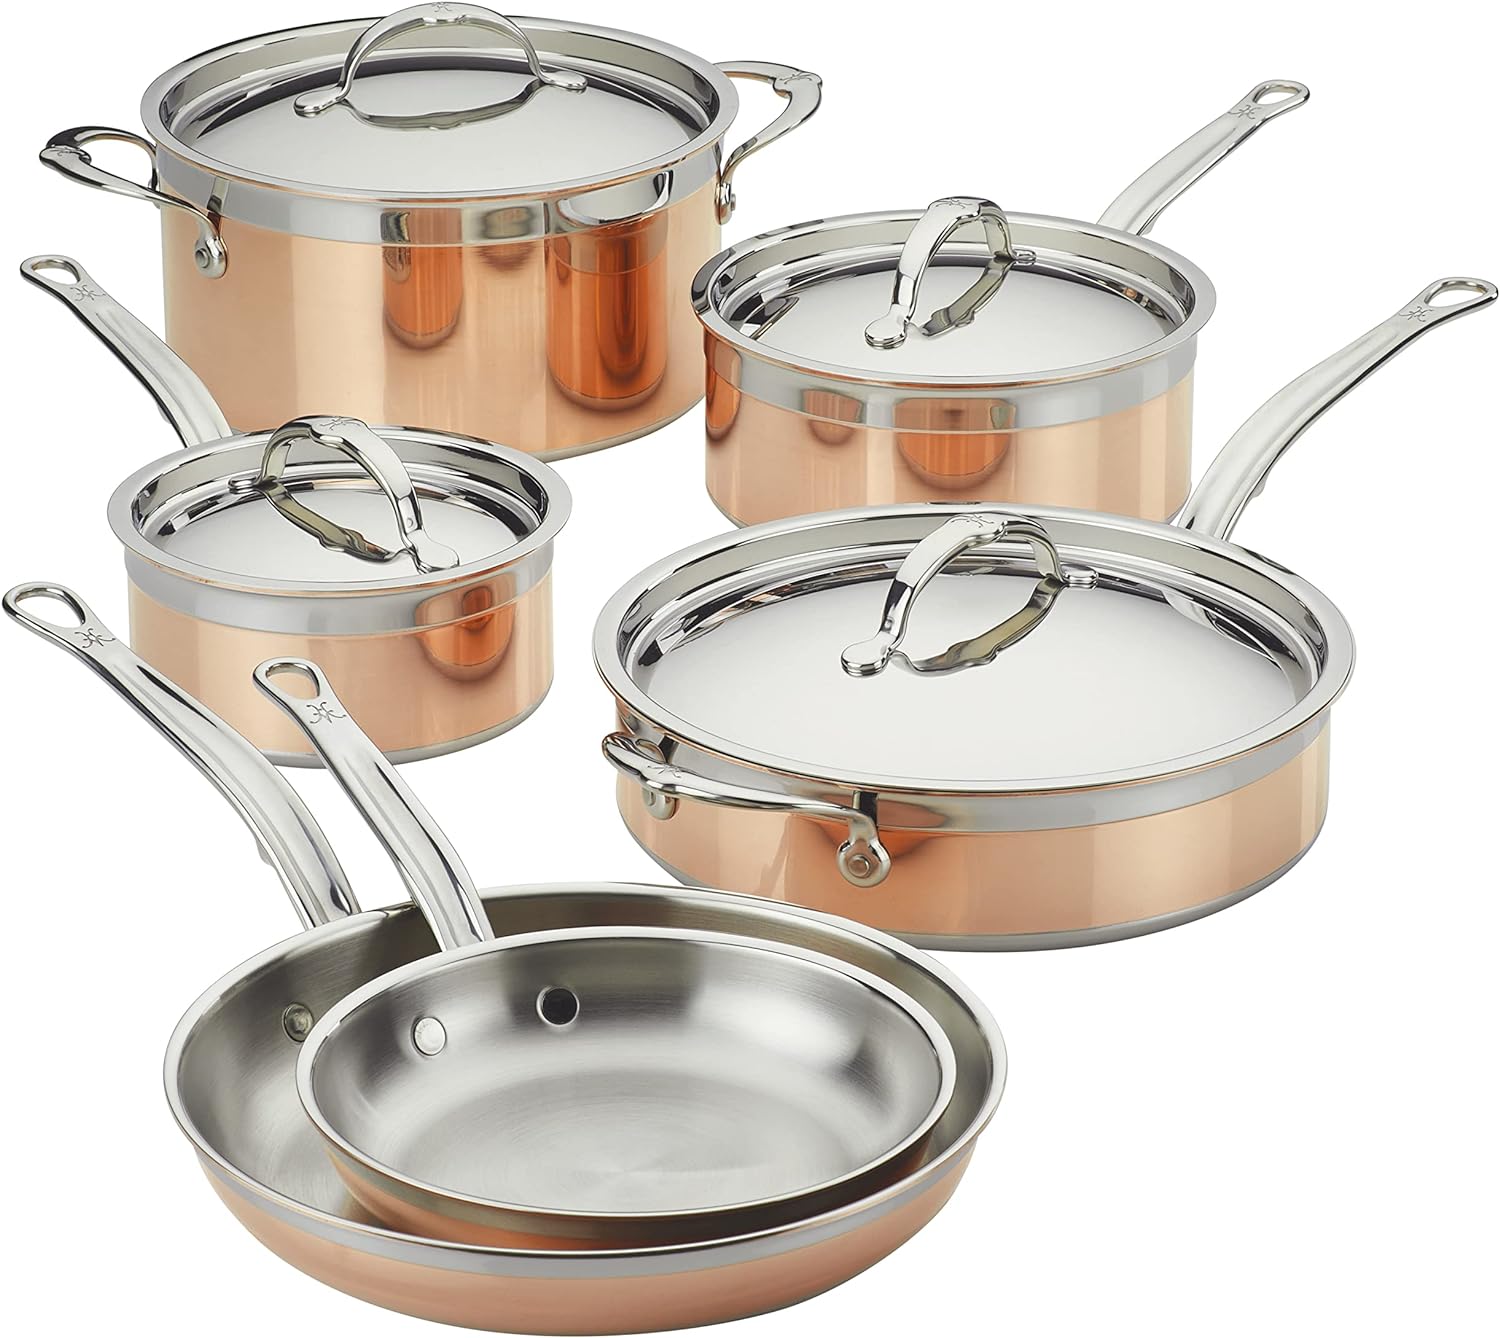 Hestan CopperBond Cookware Set Review